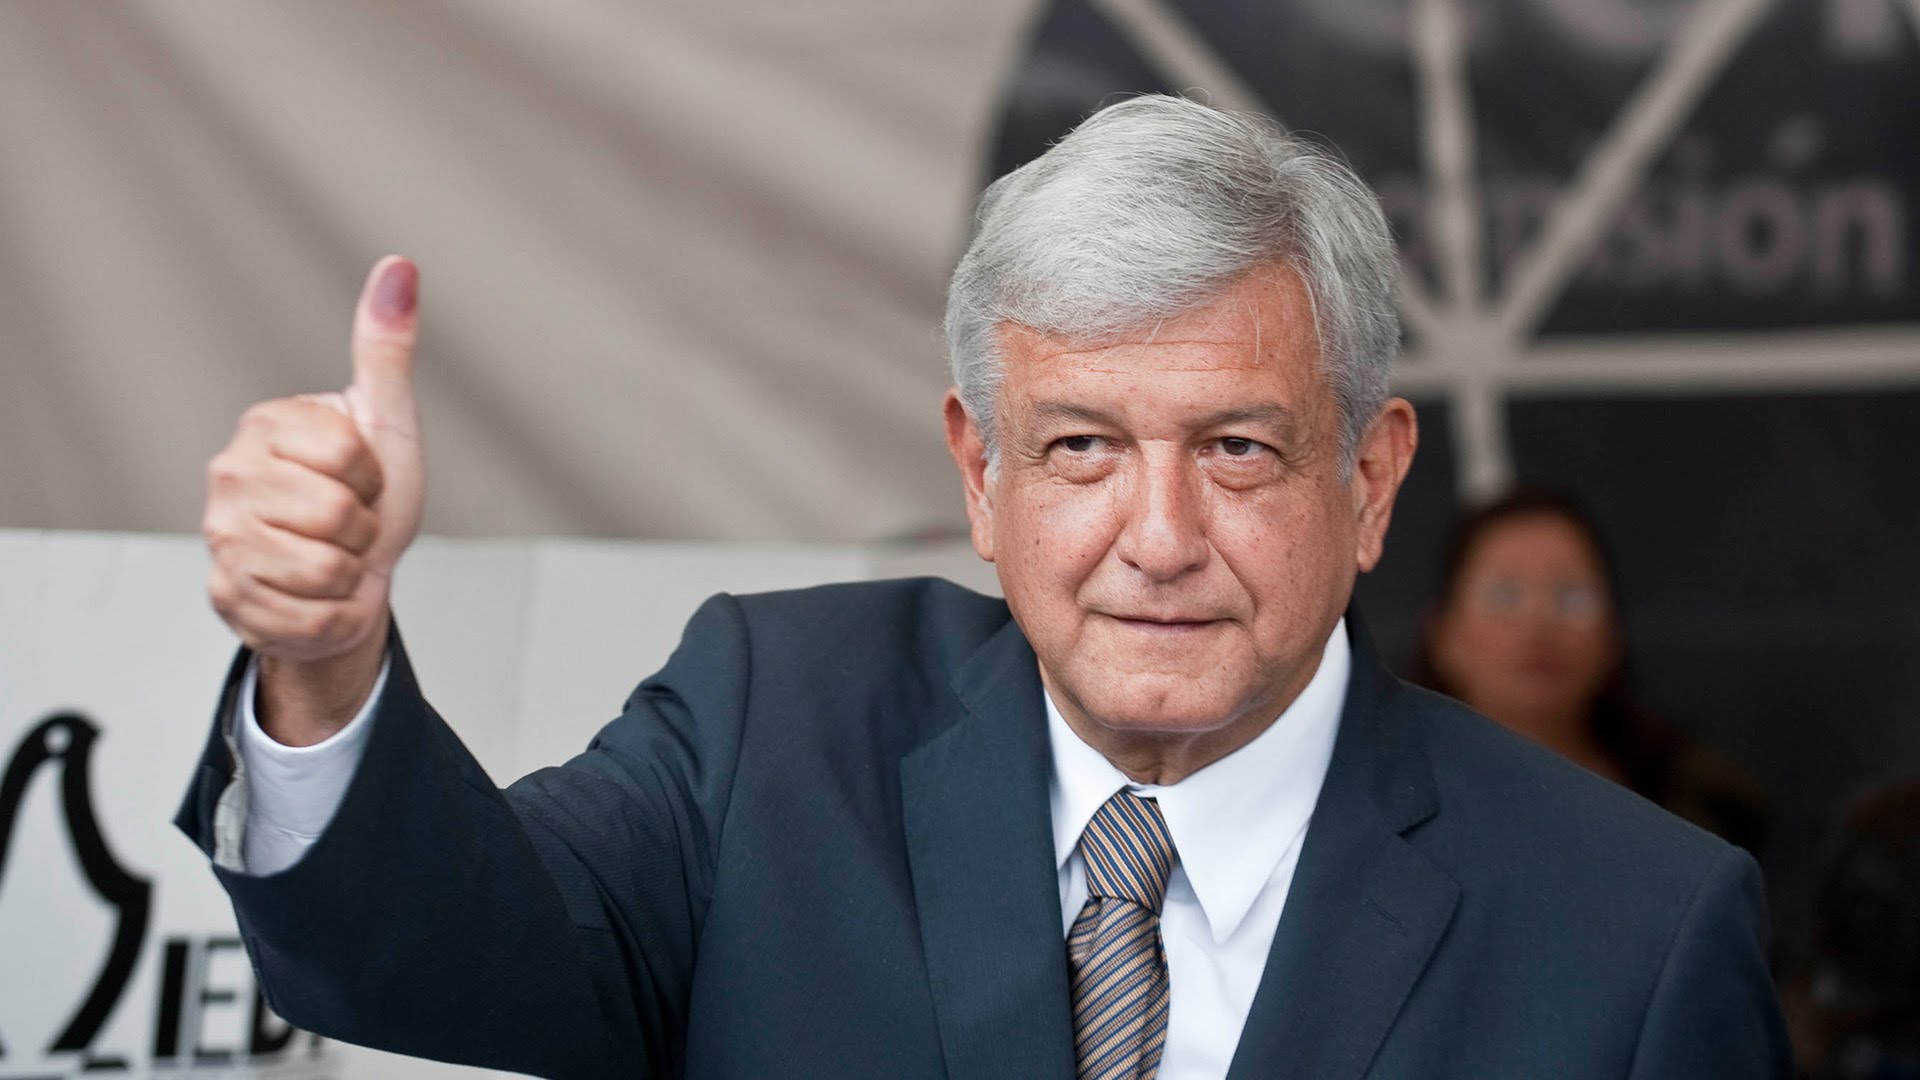 Andrés Manuel López Obrador Άντρες Μανουέλ Λόπες Ομπραδόρ